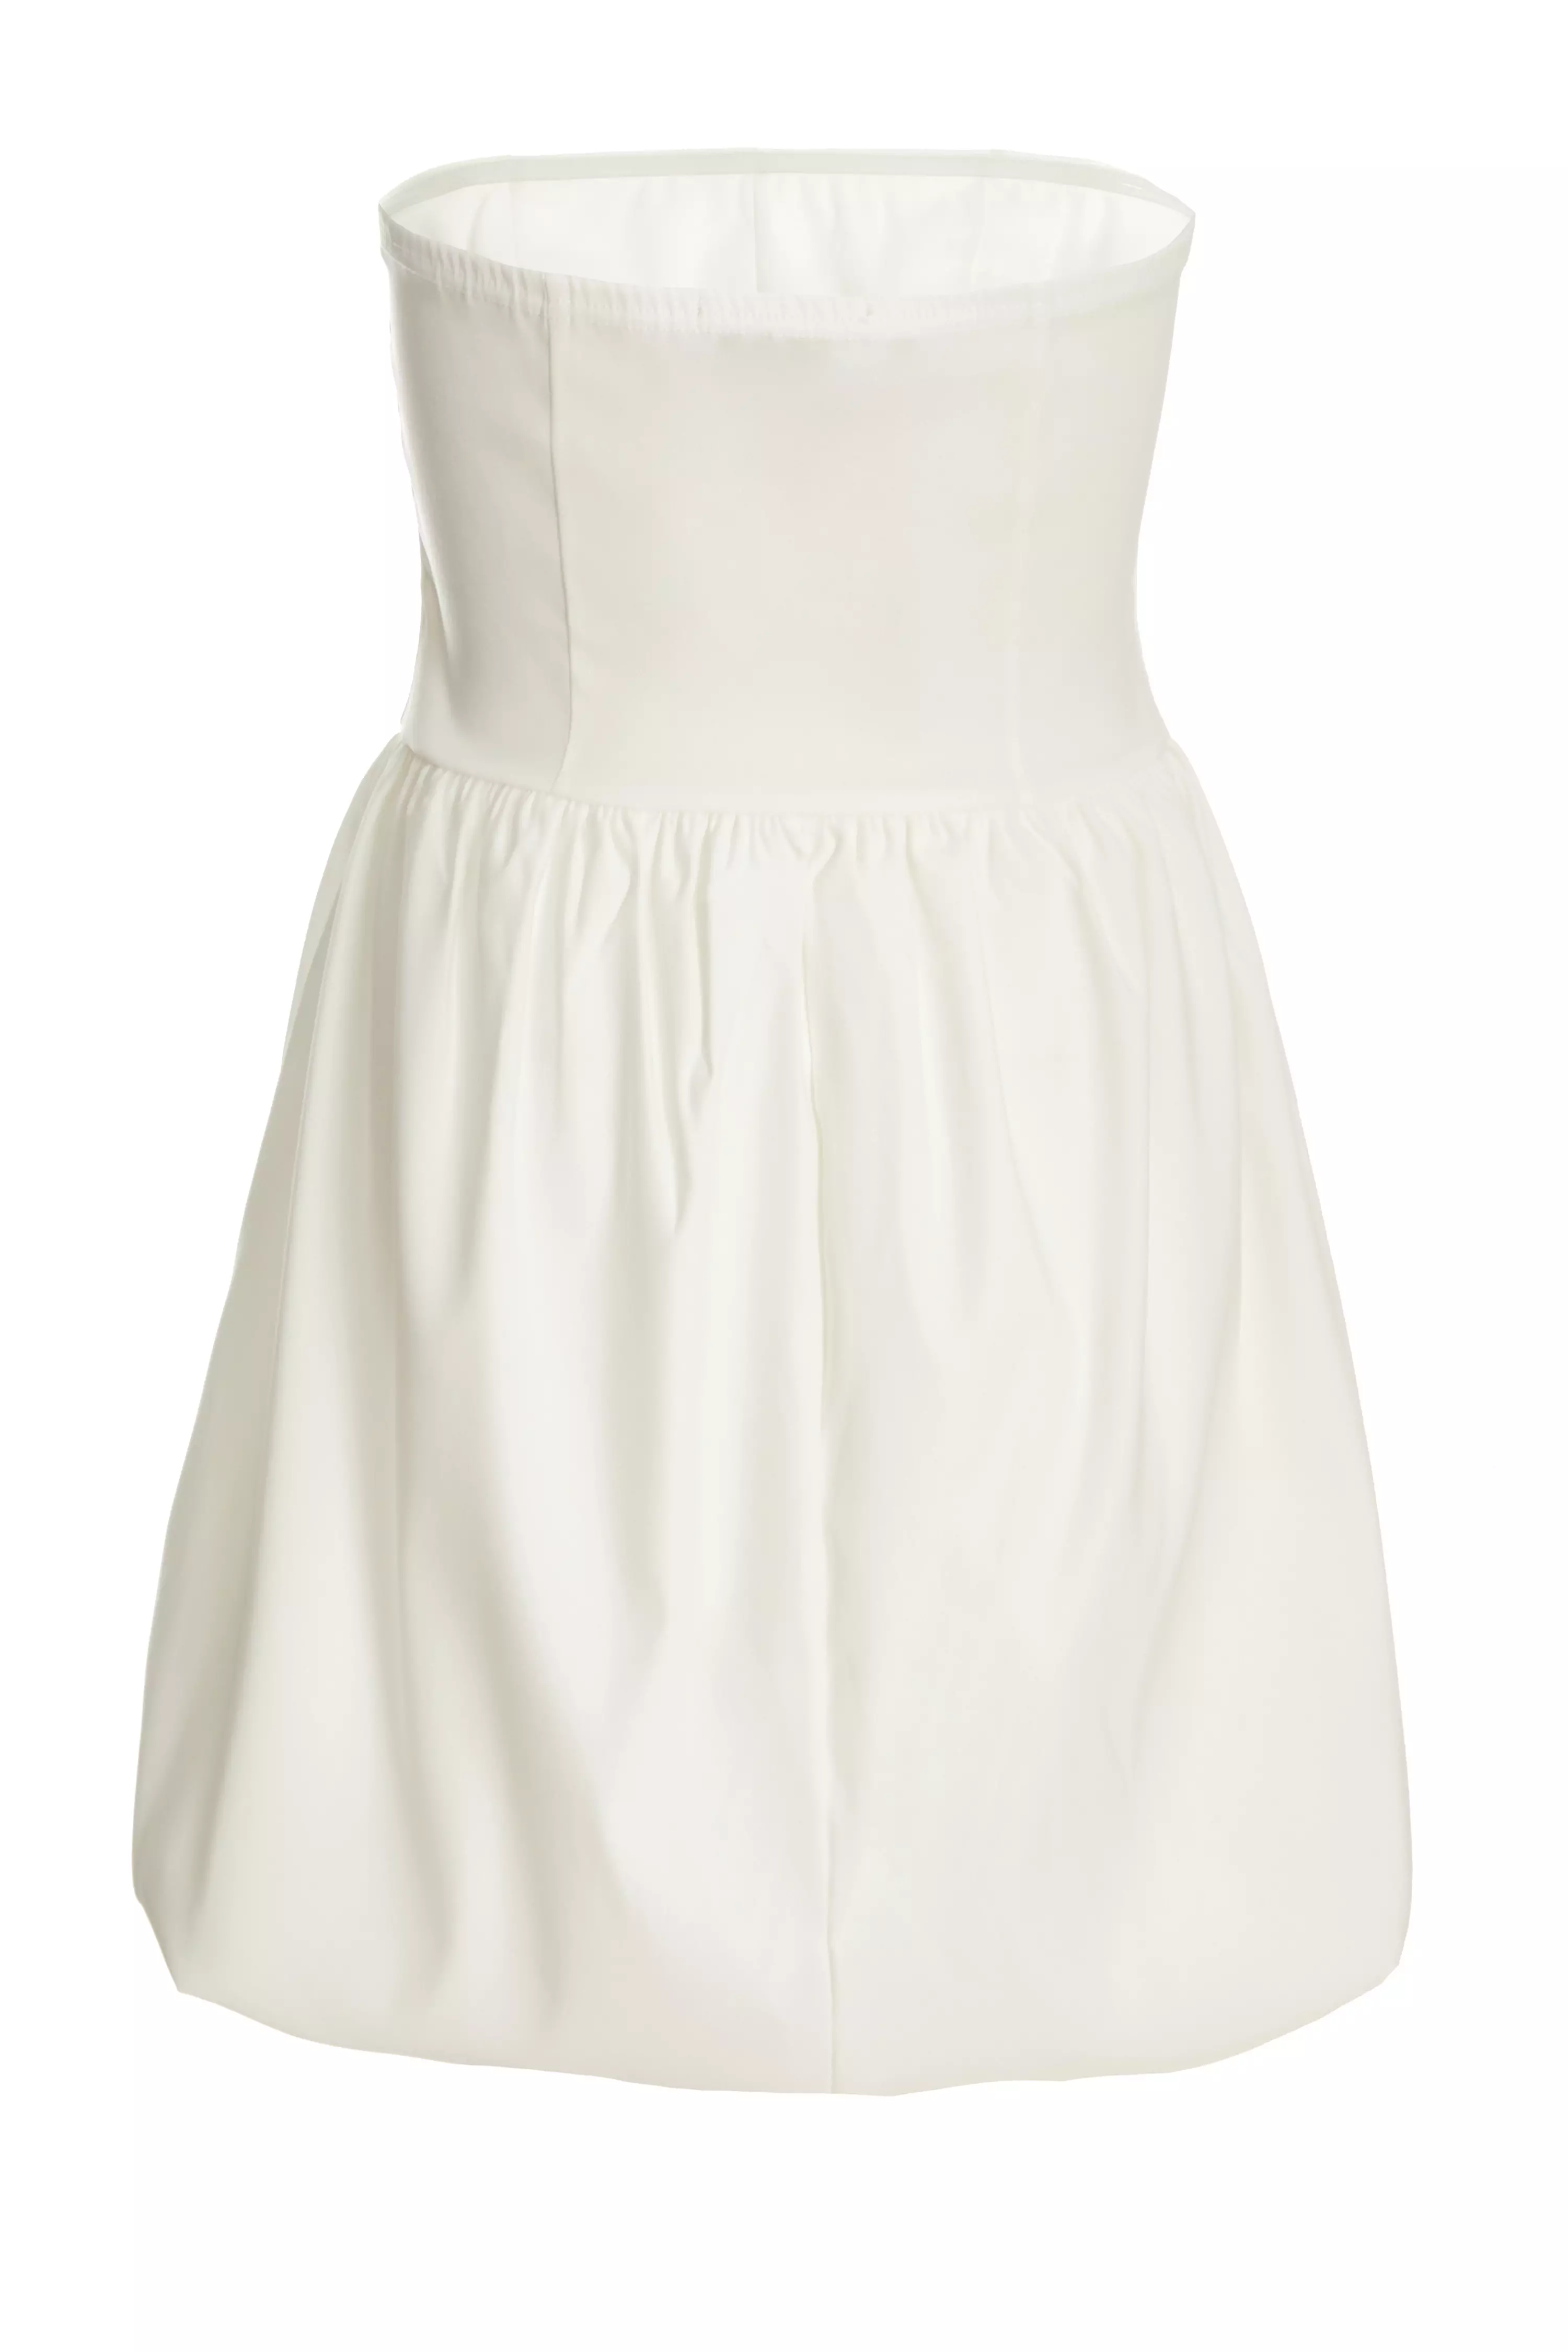 White Puff Ball Mini Dress